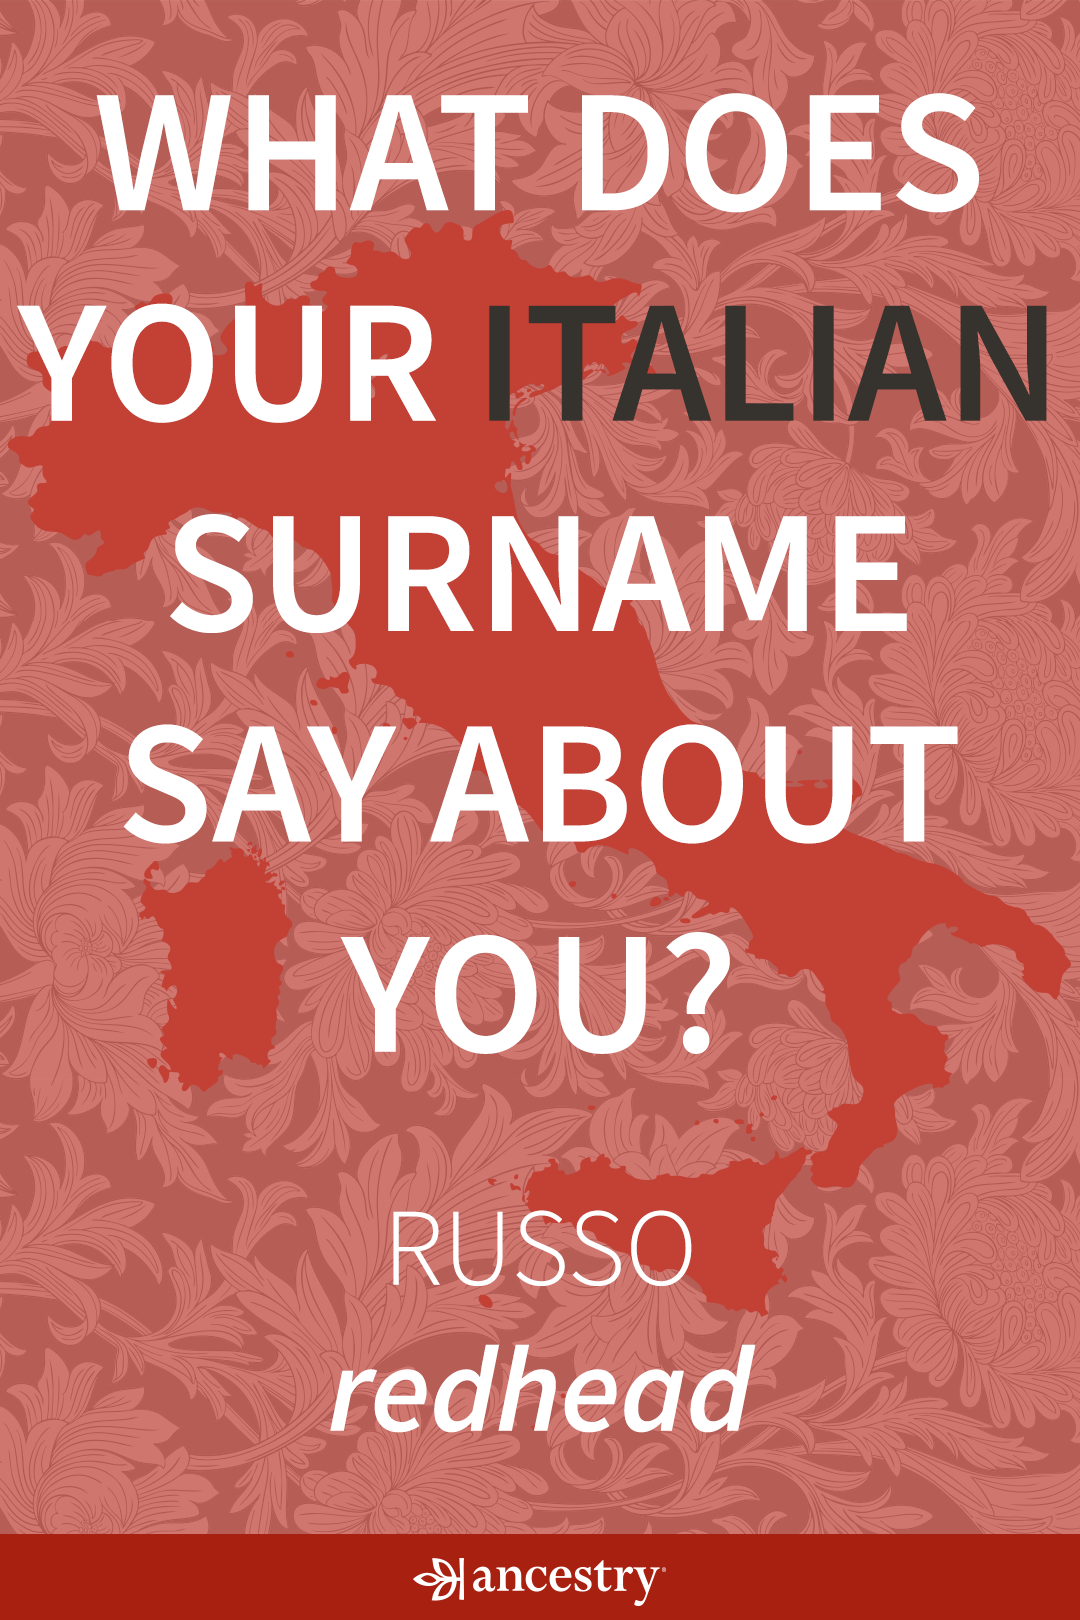 The most common Italian last names